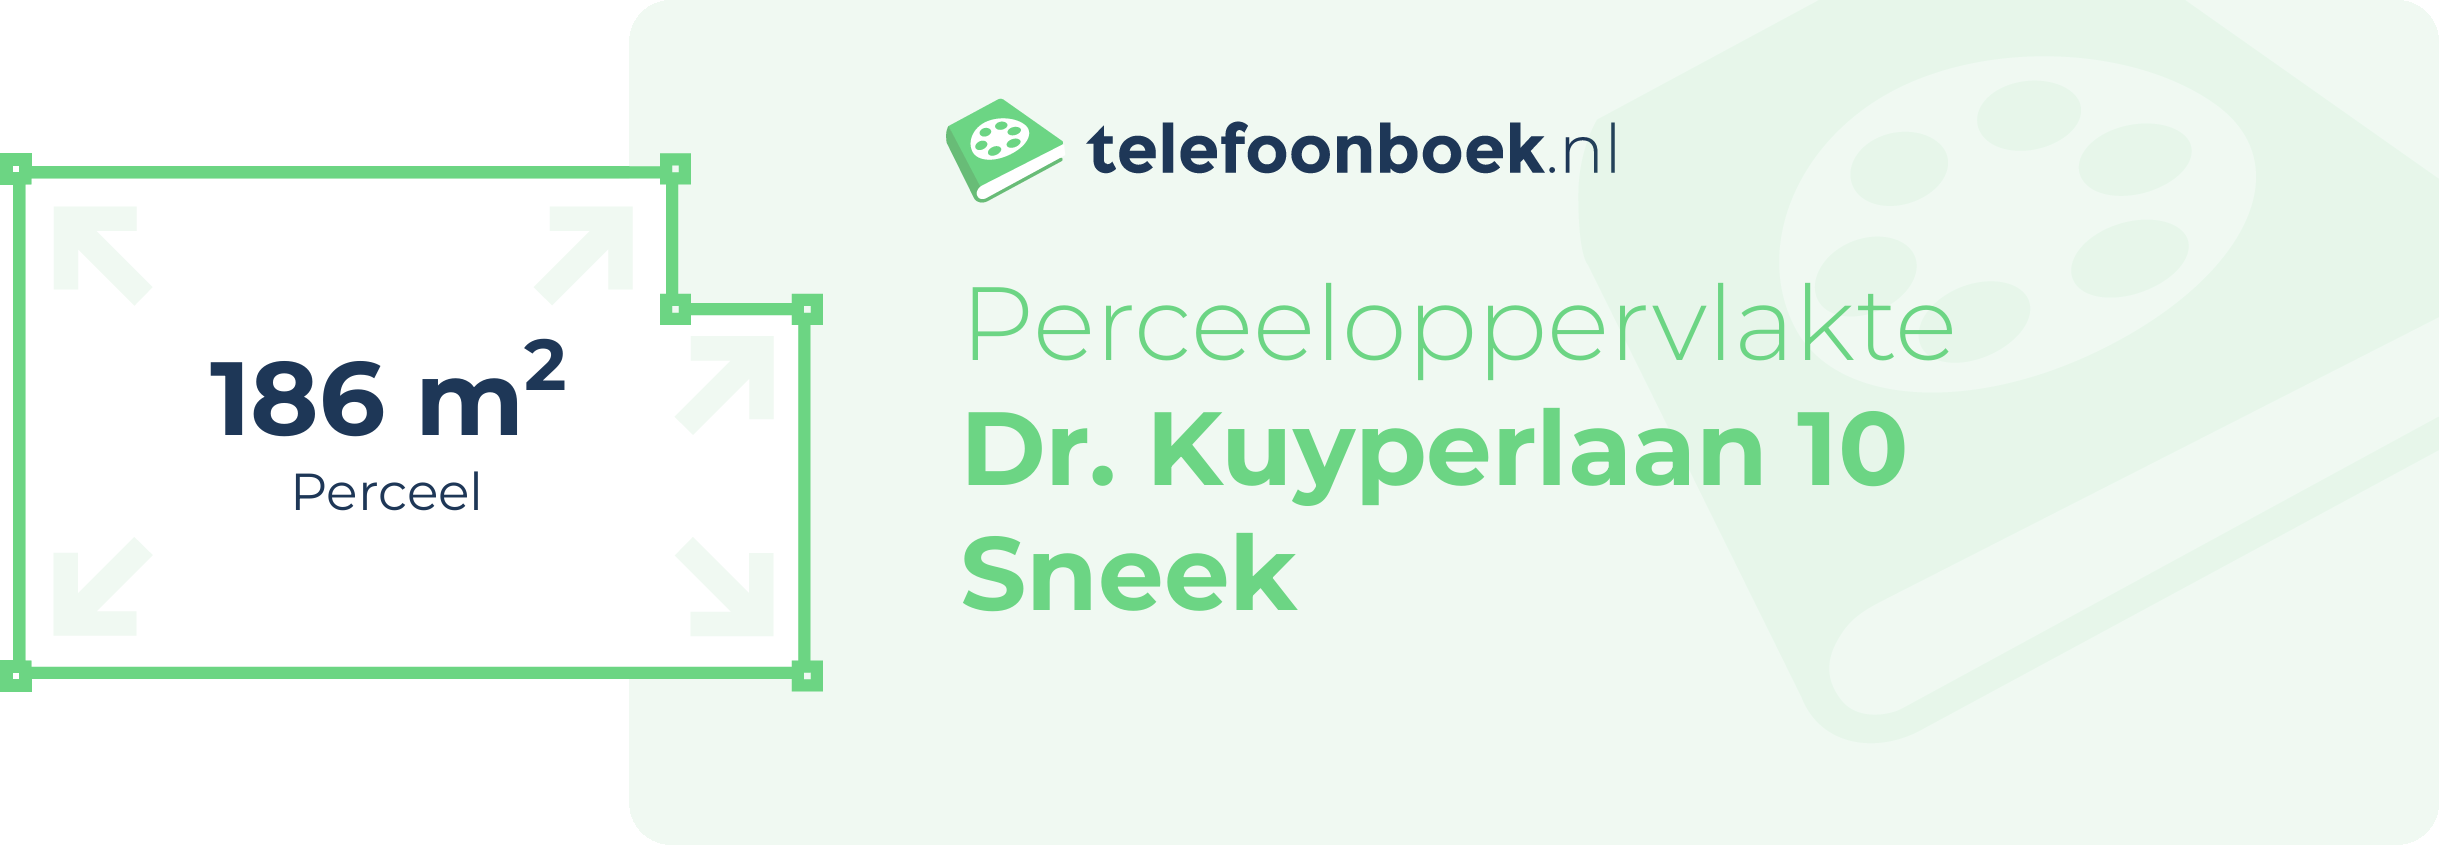 Perceeloppervlakte Dr. Kuyperlaan 10 Sneek